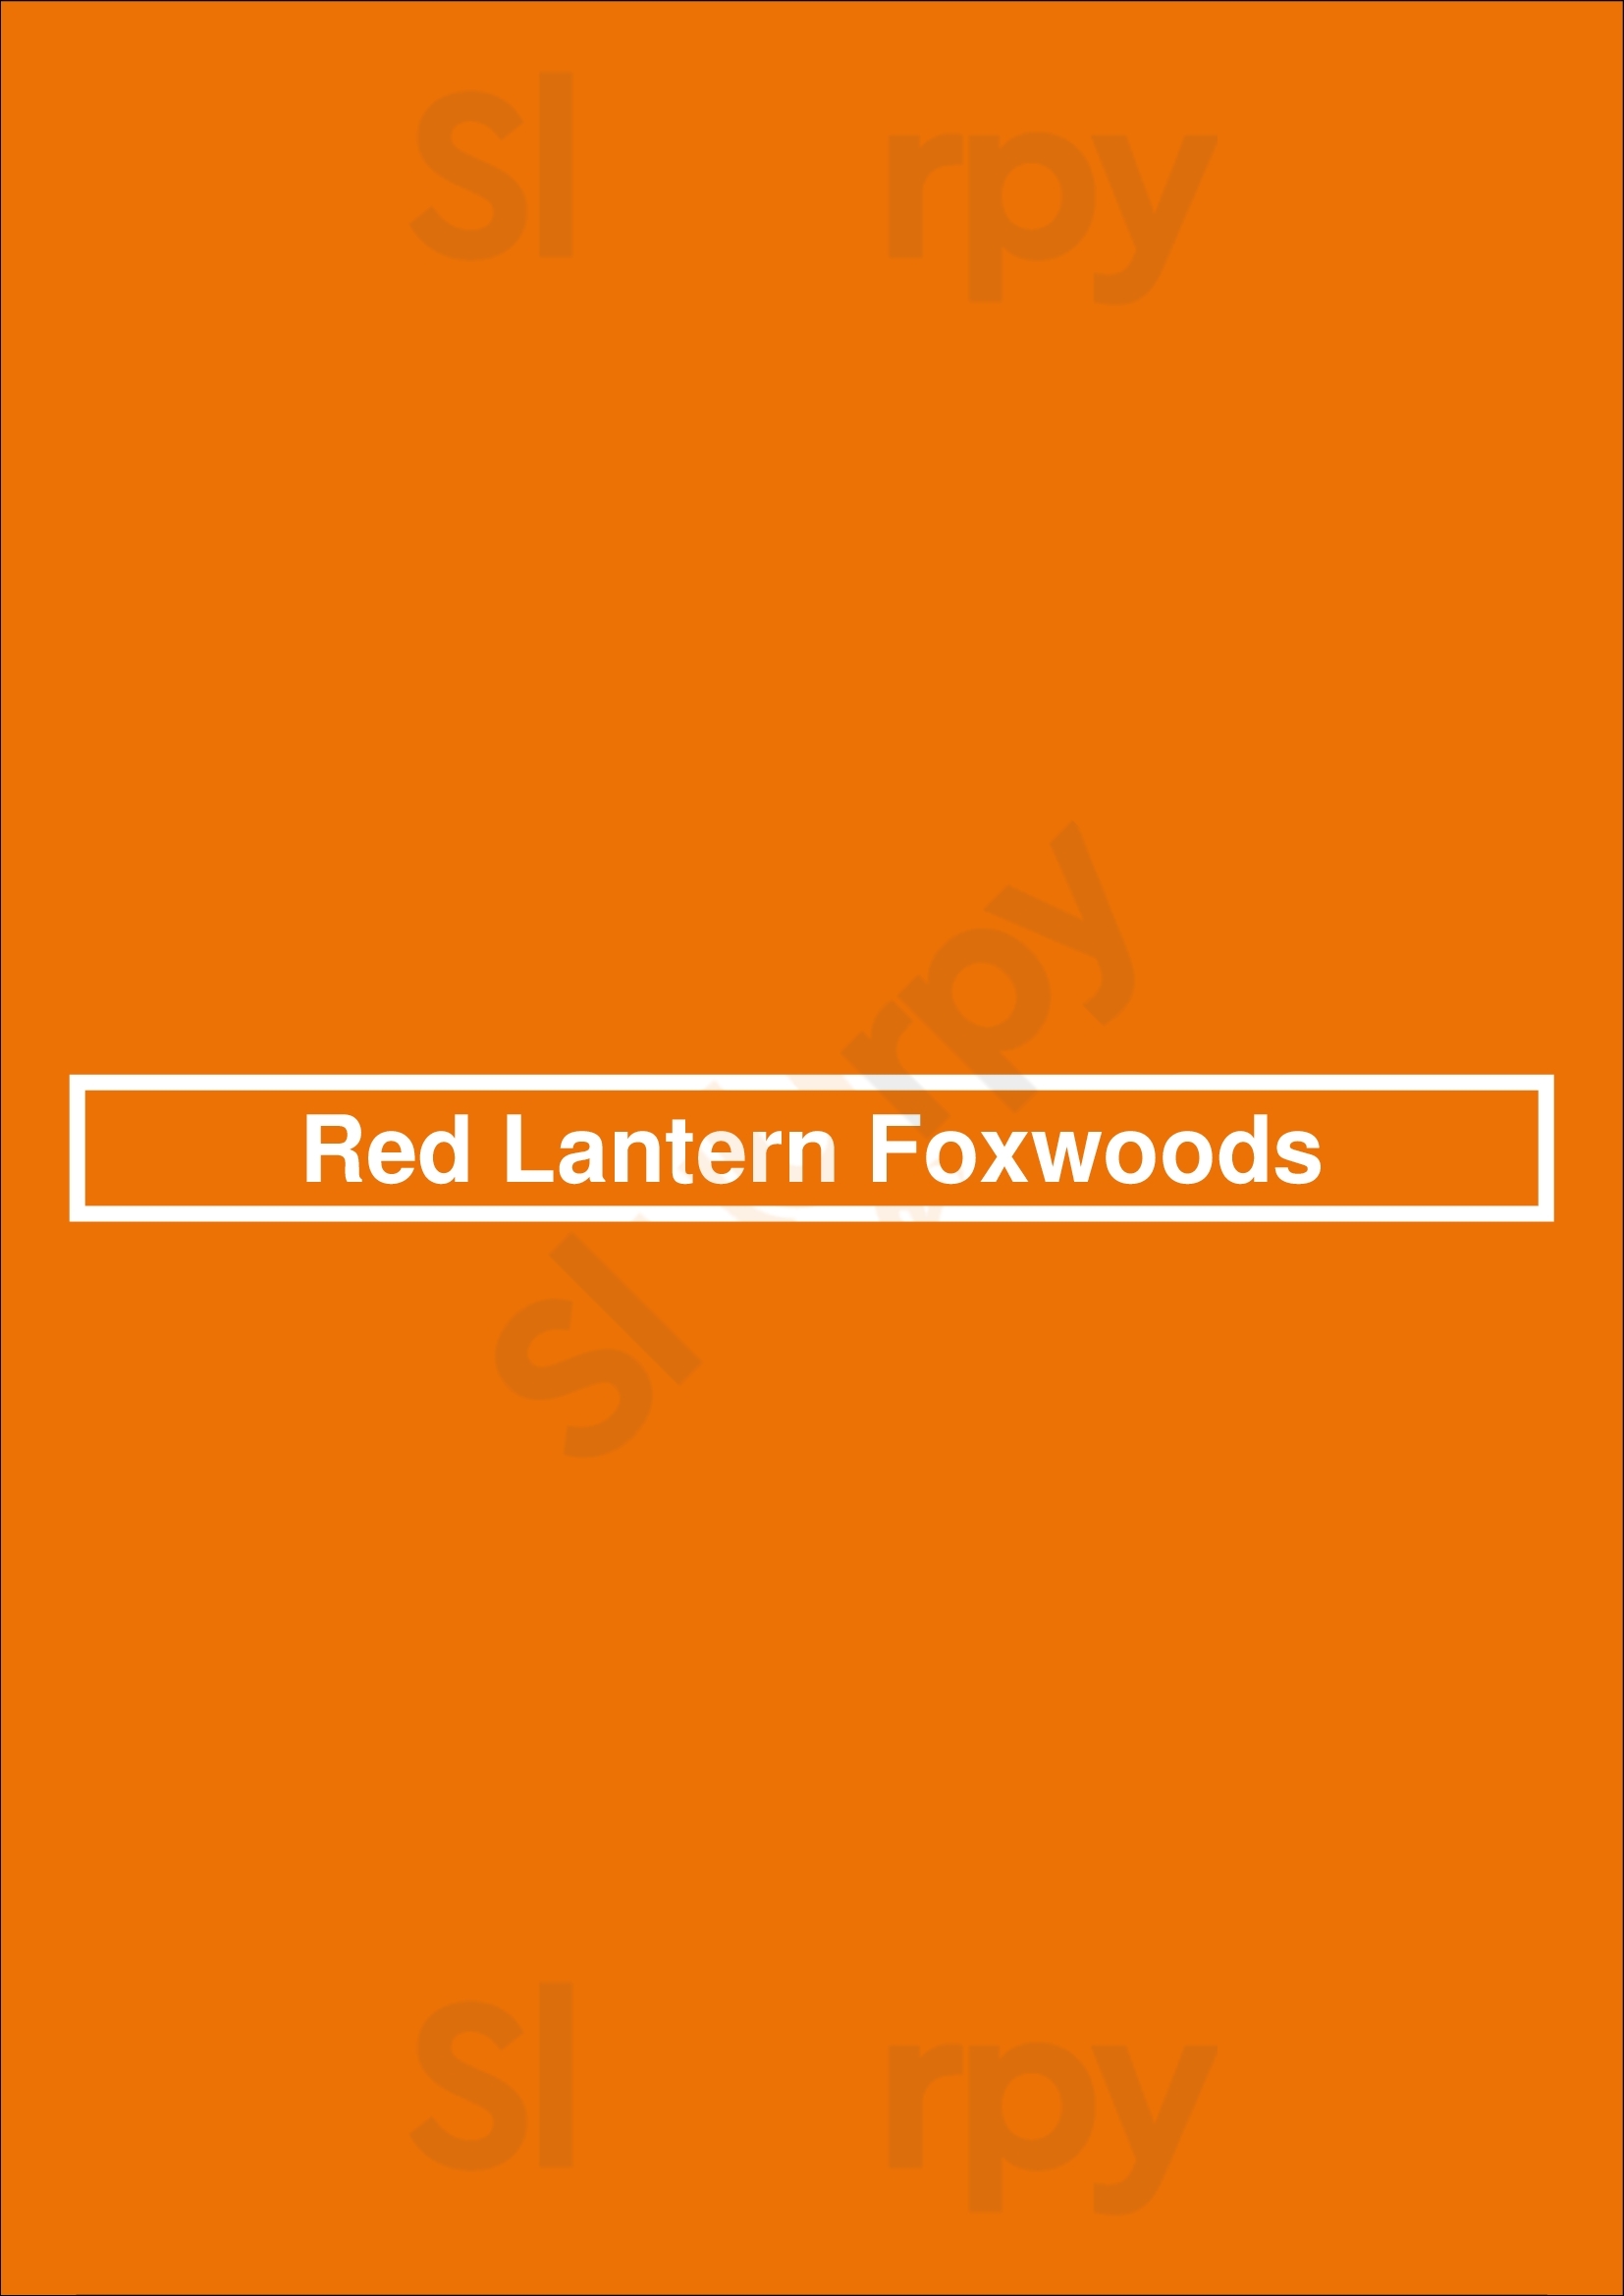 Red Lantern Foxwoods Mashantucket Menu - 1